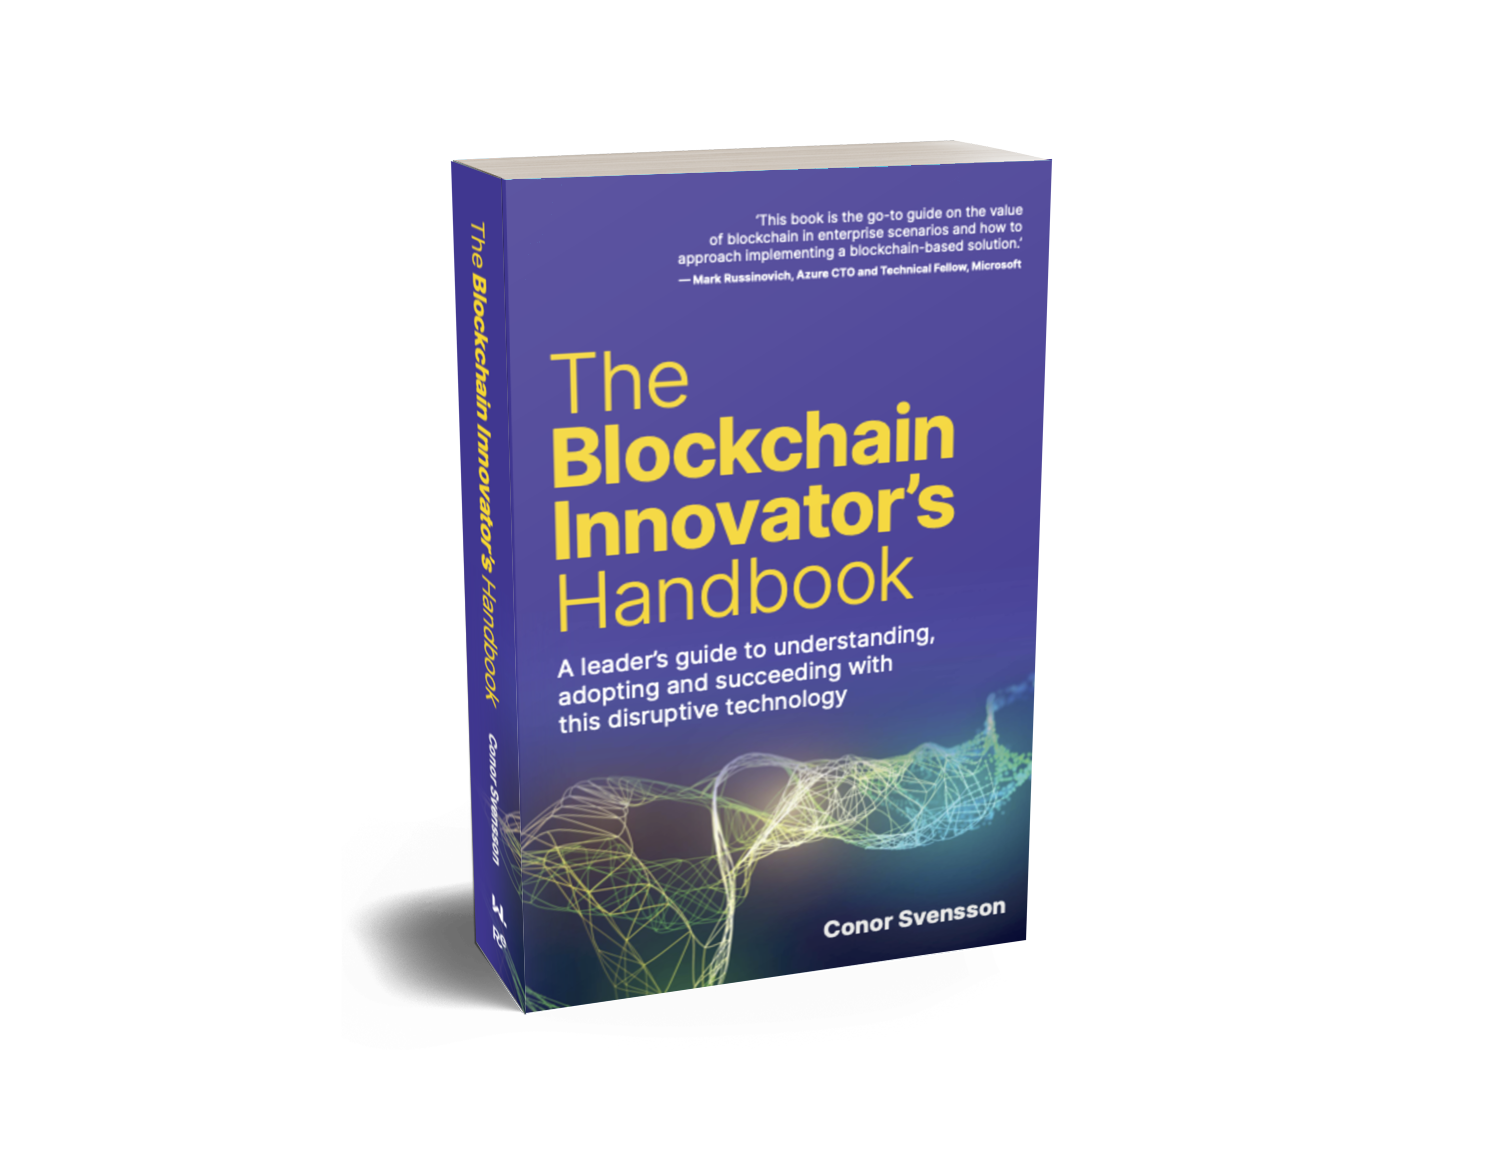 The Blockchain Innovator's Handbook